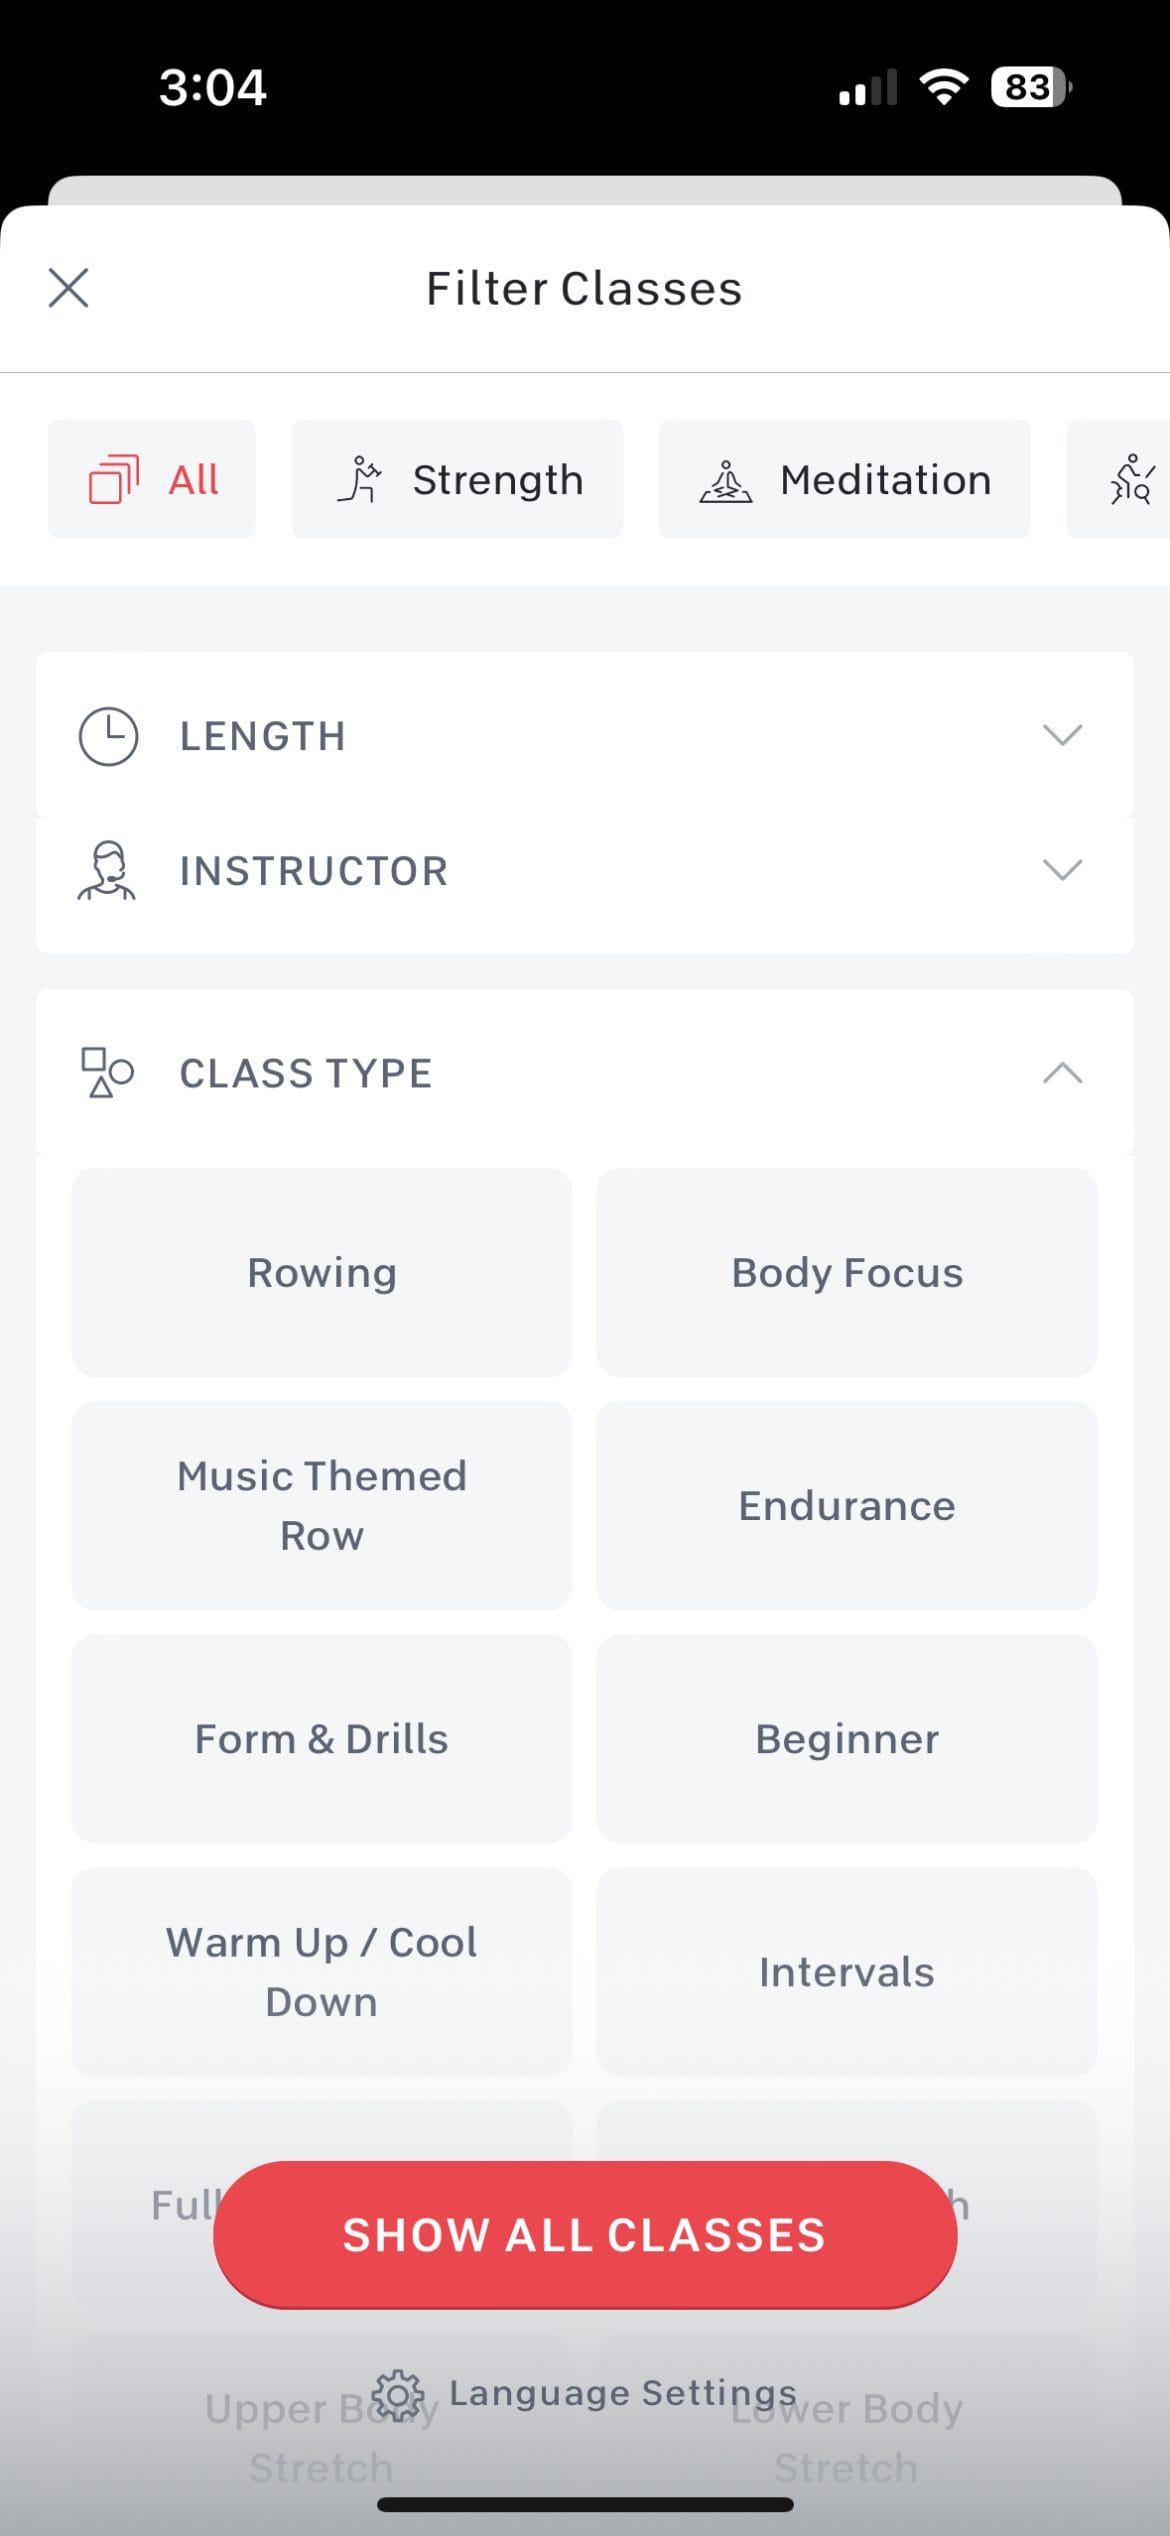 Rowing option in modalities filter on iOS App.